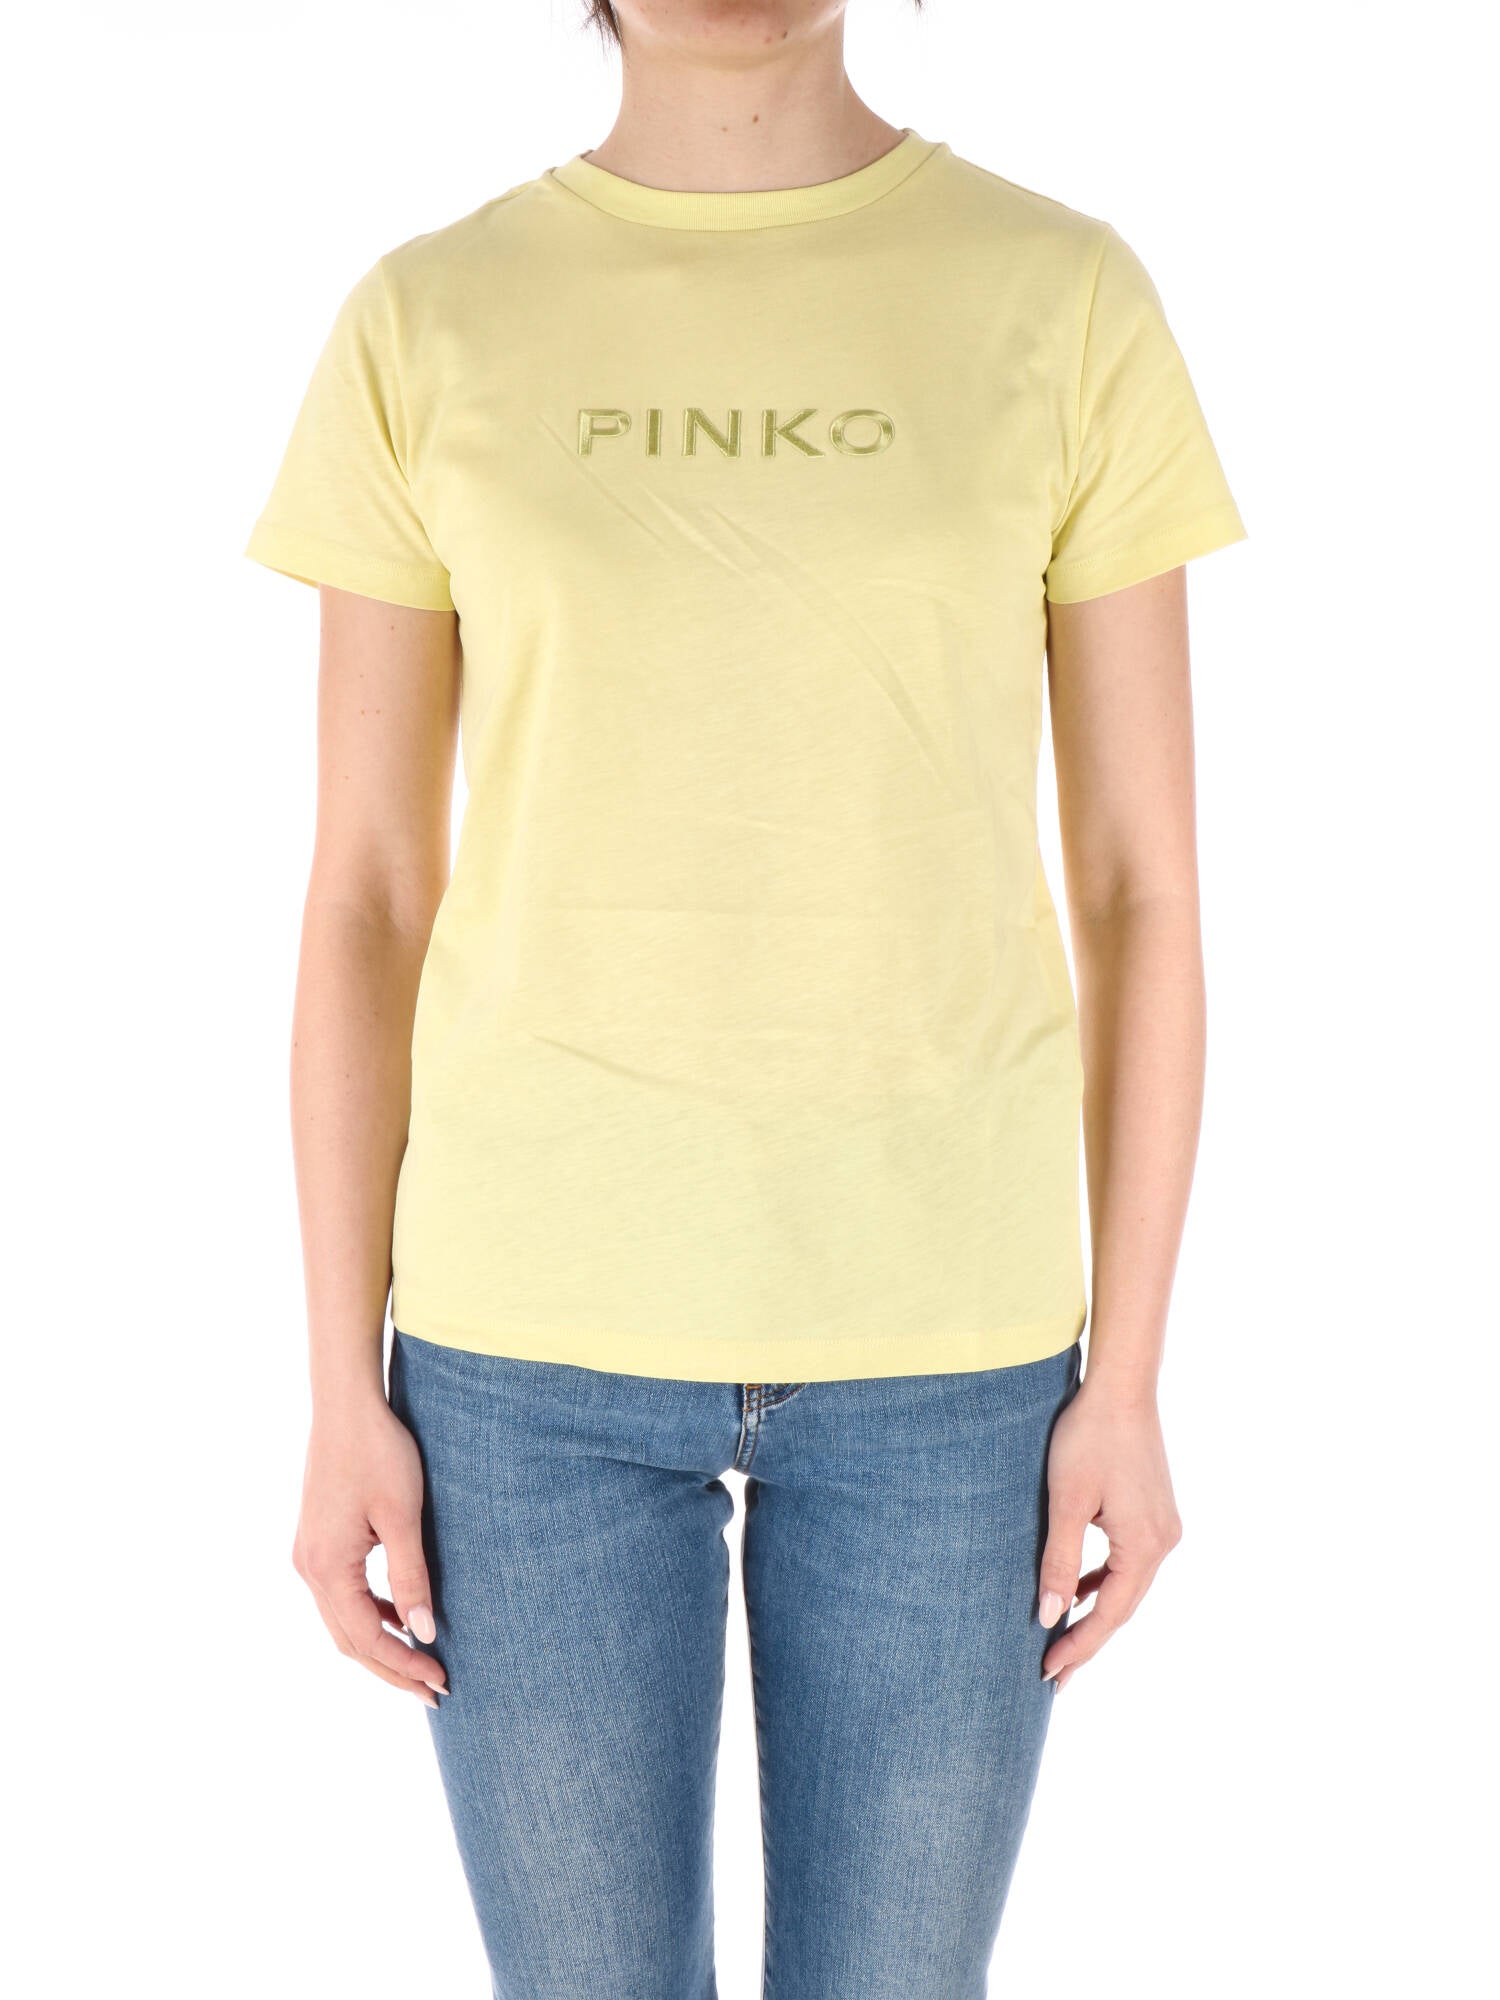 Pinko t-shirt ricamo logo